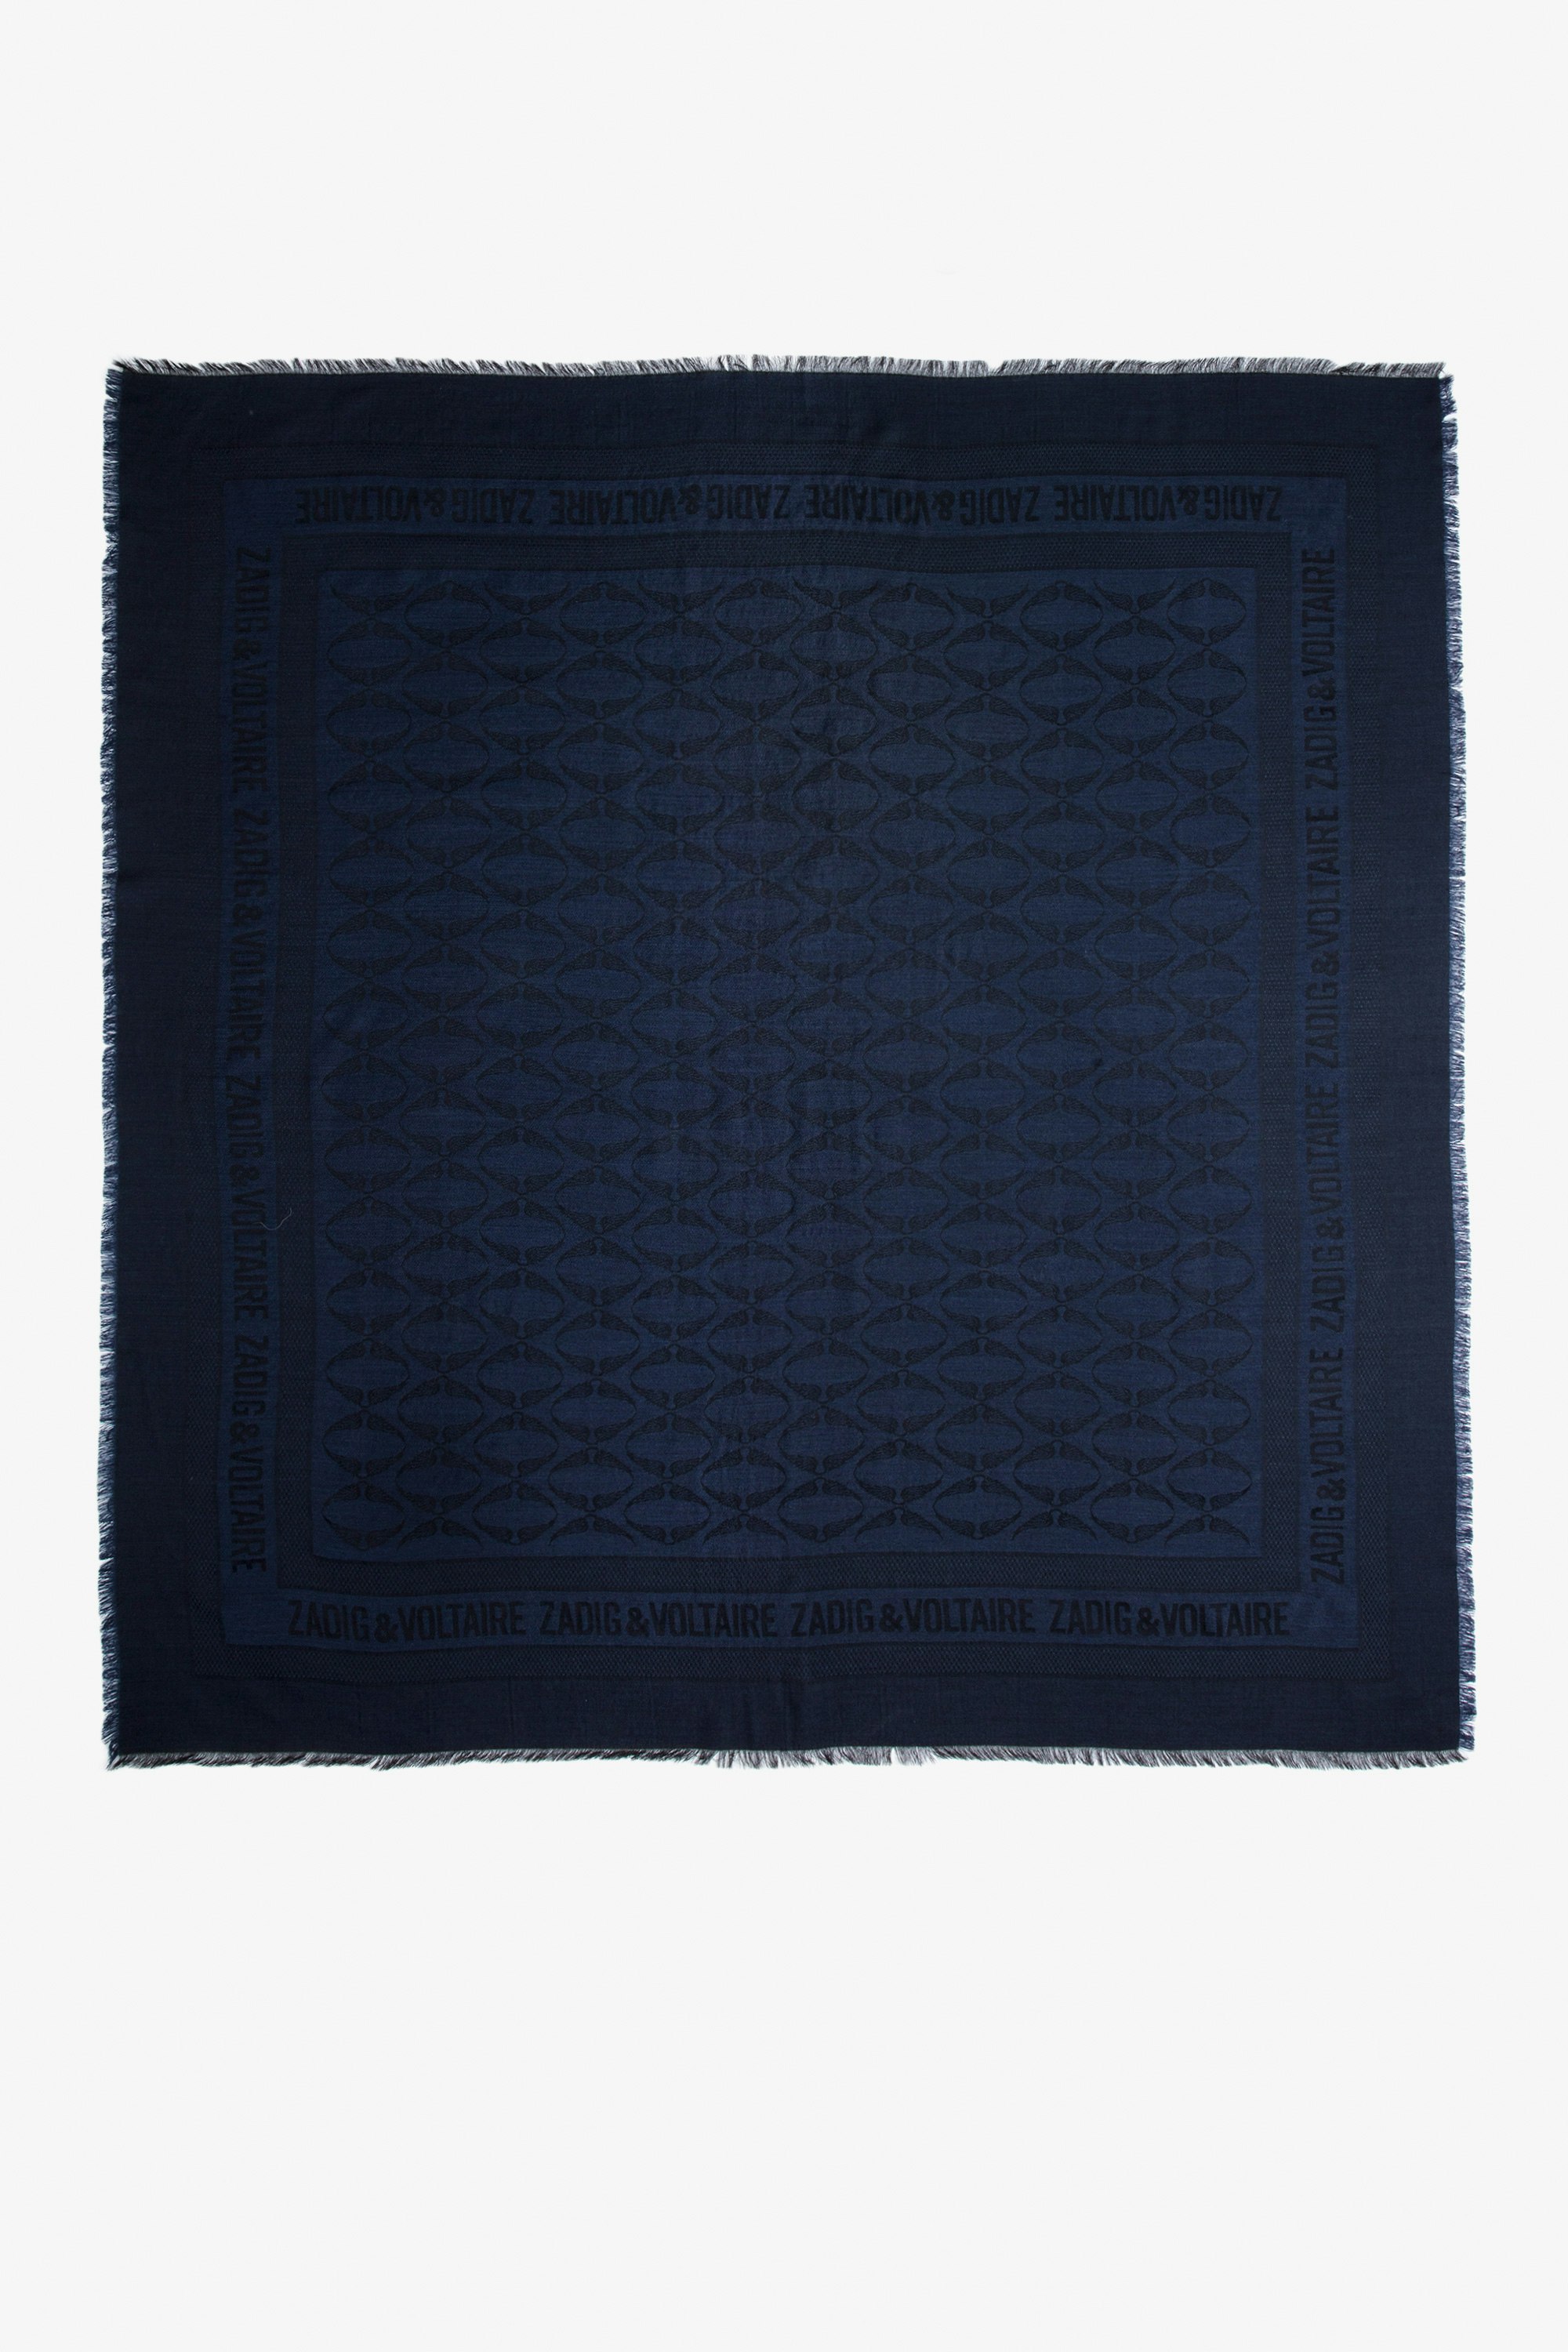 Glenn Scarf - Women’s navy blue rectangular jacquard scarf.